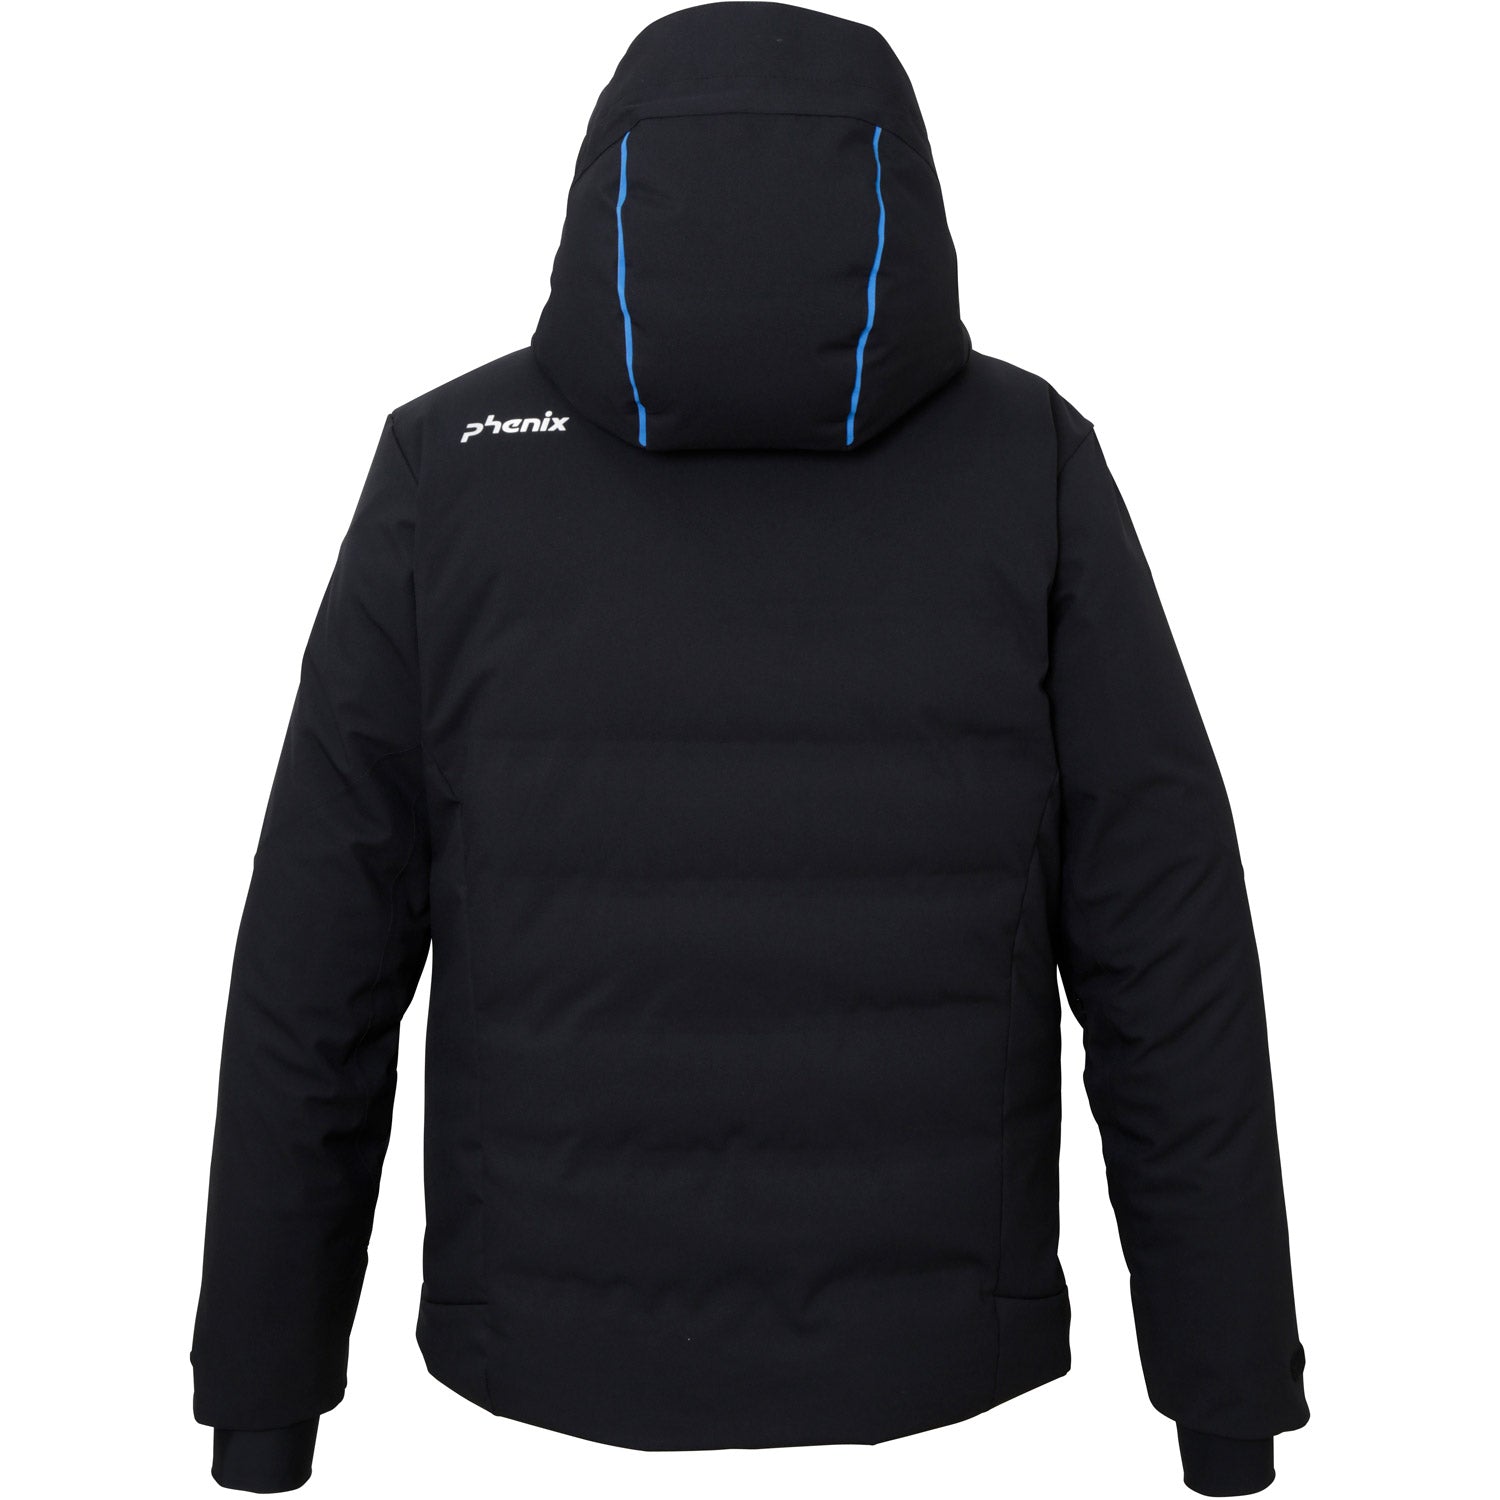 Phenix Escala Ski Jacket 2021 Black